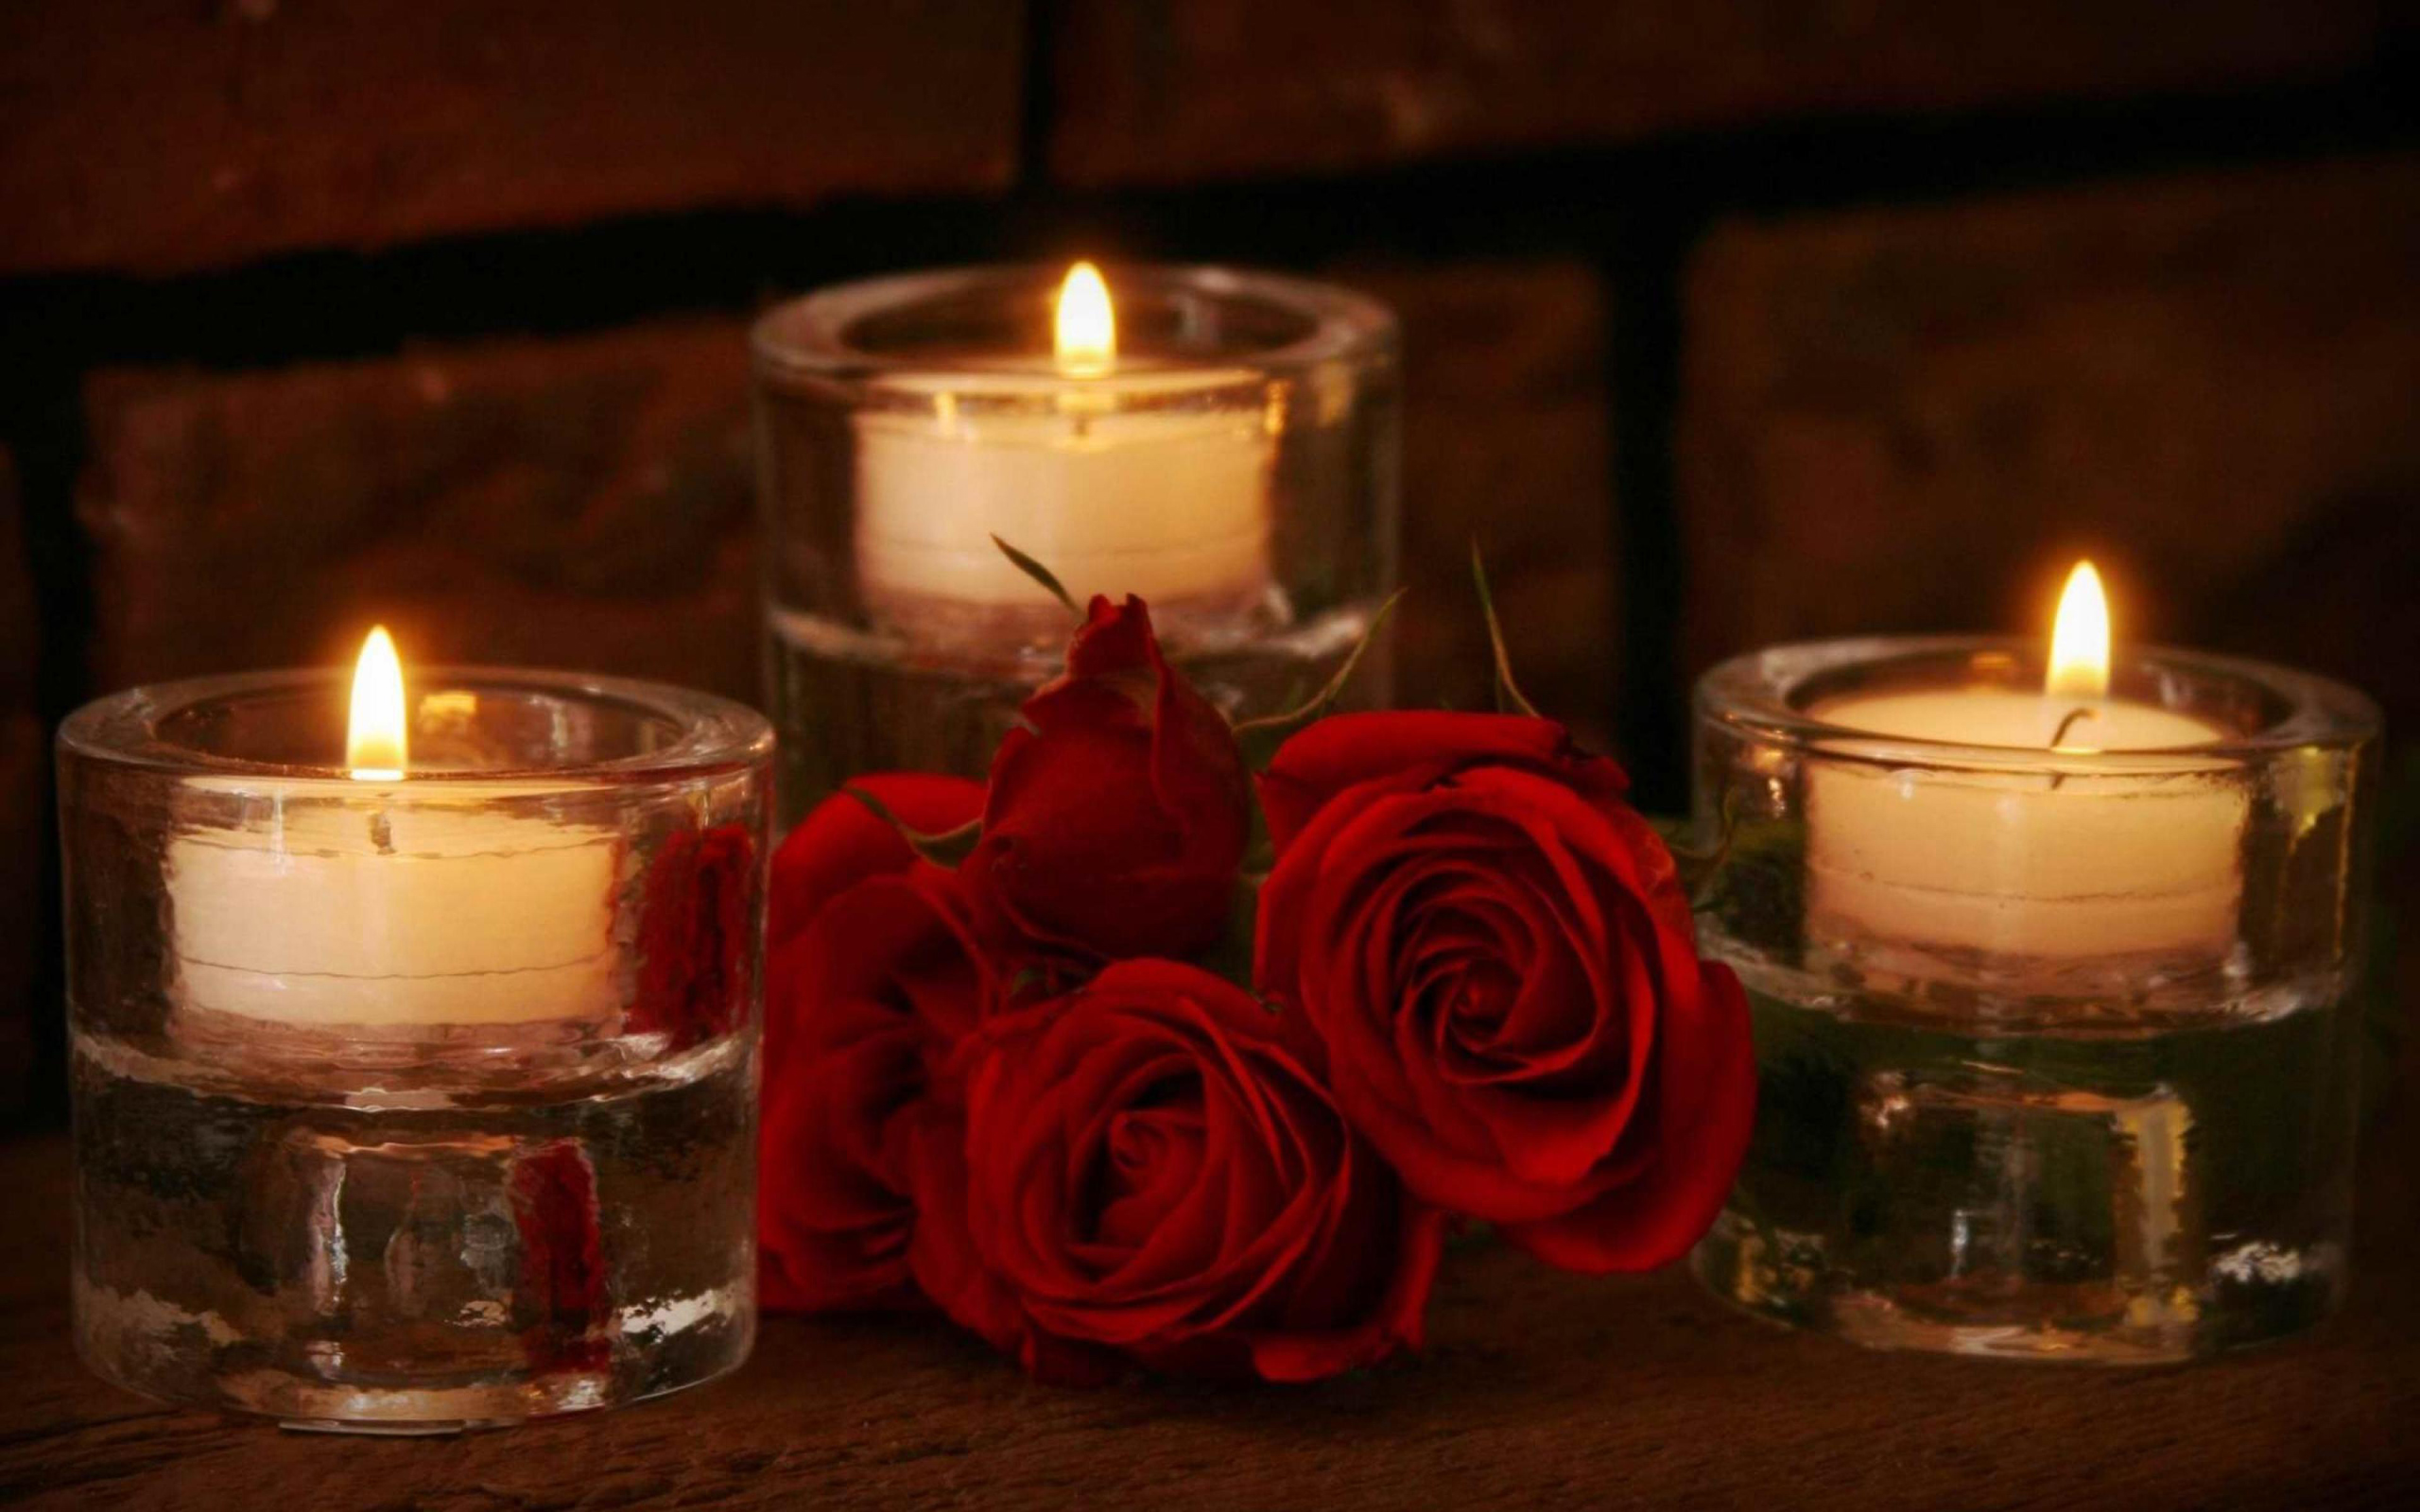 Romantic Roses And Candles 021 2560x1600 Hd Wallpaper : Wallpapers13.com